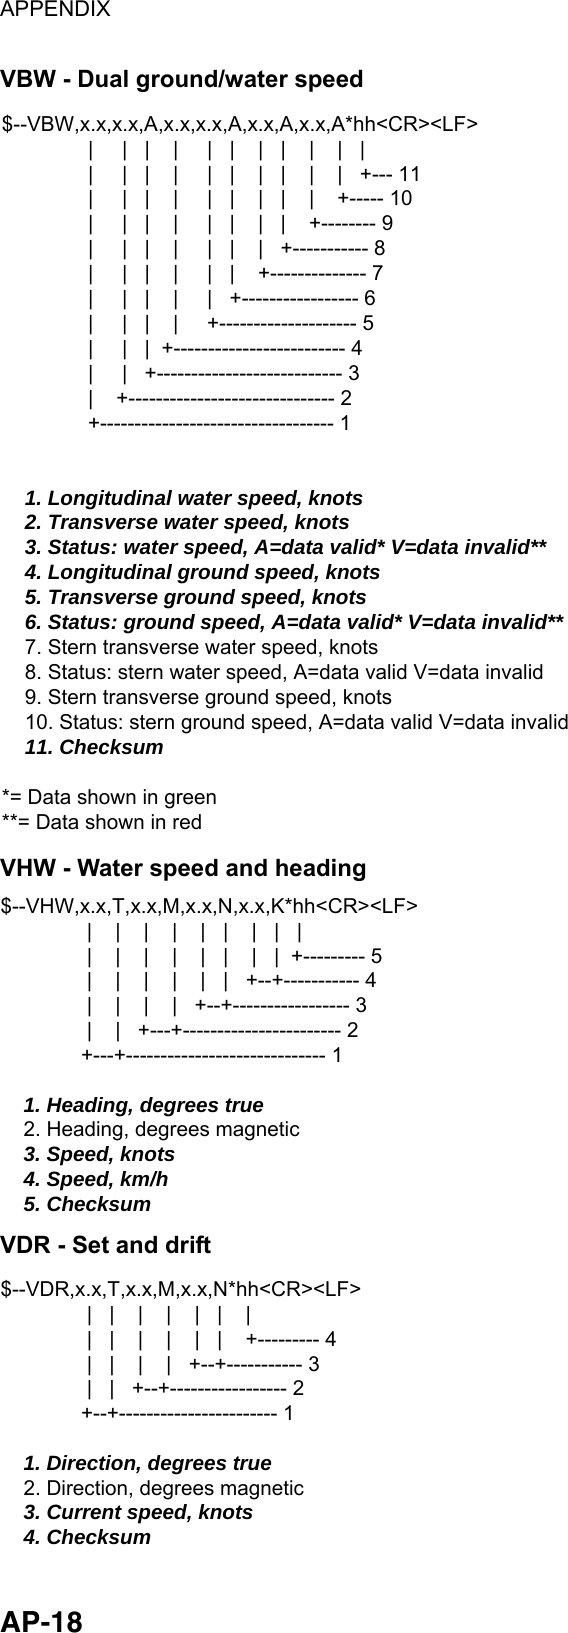 APPENDIX  AP-18 VBW - Dual ground/water speed $--VBW,x.x,x.x,A,x.x,x.x,A,x.x,A,x.x,A*hh&lt;CR&gt;&lt;LF&gt;               |     |   |    |     |   |    |   |    |    |   |               |     |   |    |     |   |    |   |    |    |   +--- 11               |     |   |    |     |   |    |   |    |    +----- 10               |     |   |    |     |   |    |   |    +-------- 9               |     |   |    |     |   |    |   +----------- 8               |     |   |    |     |   |    +-------------- 7               |     |   |    |     |   +----------------- 6               |     |   |    |     +-------------------- 5               |     |   |  +------------------------- 4               |     |   +--------------------------- 3               |    +------------------------------ 2               +---------------------------------- 1              1. Longitudinal water speed, knots    2. Transverse water speed, knots    3. Status: water speed, A=data valid* V=data invalid**    4. Longitudinal ground speed, knots    5. Transverse ground speed, knots    6. Status: ground speed, A=data valid* V=data invalid**    7. Stern transverse water speed, knots    8. Status: stern water speed, A=data valid V=data invalid    9. Stern transverse ground speed, knots    10. Status: stern ground speed, A=data valid V=data invalid    11. Checksum*= Data shown in green**= Data shown in red VHW - Water speed and heading $--VHW,x.x,T,x.x,M,x.x,N,x.x,K*hh&lt;CR&gt;&lt;LF&gt;               |    |    |    |    |   |    |   |   |                |    |    |    |    |   |    |   |  +--------- 5               |    |    |    |    |   |   +--+----------- 4               |    |    |    |   +--+----------------- 3               |    |   +---+----------------------- 2              +---+----------------------------- 1    1. Heading, degrees true    2. Heading, degrees magnetic    3. Speed, knots    4. Speed, km/h    5. Checksum VDR - Set and drift $--VDR,x.x,T,x.x,M,x.x,N*hh&lt;CR&gt;&lt;LF&gt;               |   |    |    |    |   |    |                |   |    |    |    |   |    +--------- 4               |   |    |    |   +--+----------- 3               |   |   +--+----------------- 2              +--+----------------------- 1    1. Direction, degrees true    2. Direction, degrees magnetic    3. Current speed, knots    4. Checksum 